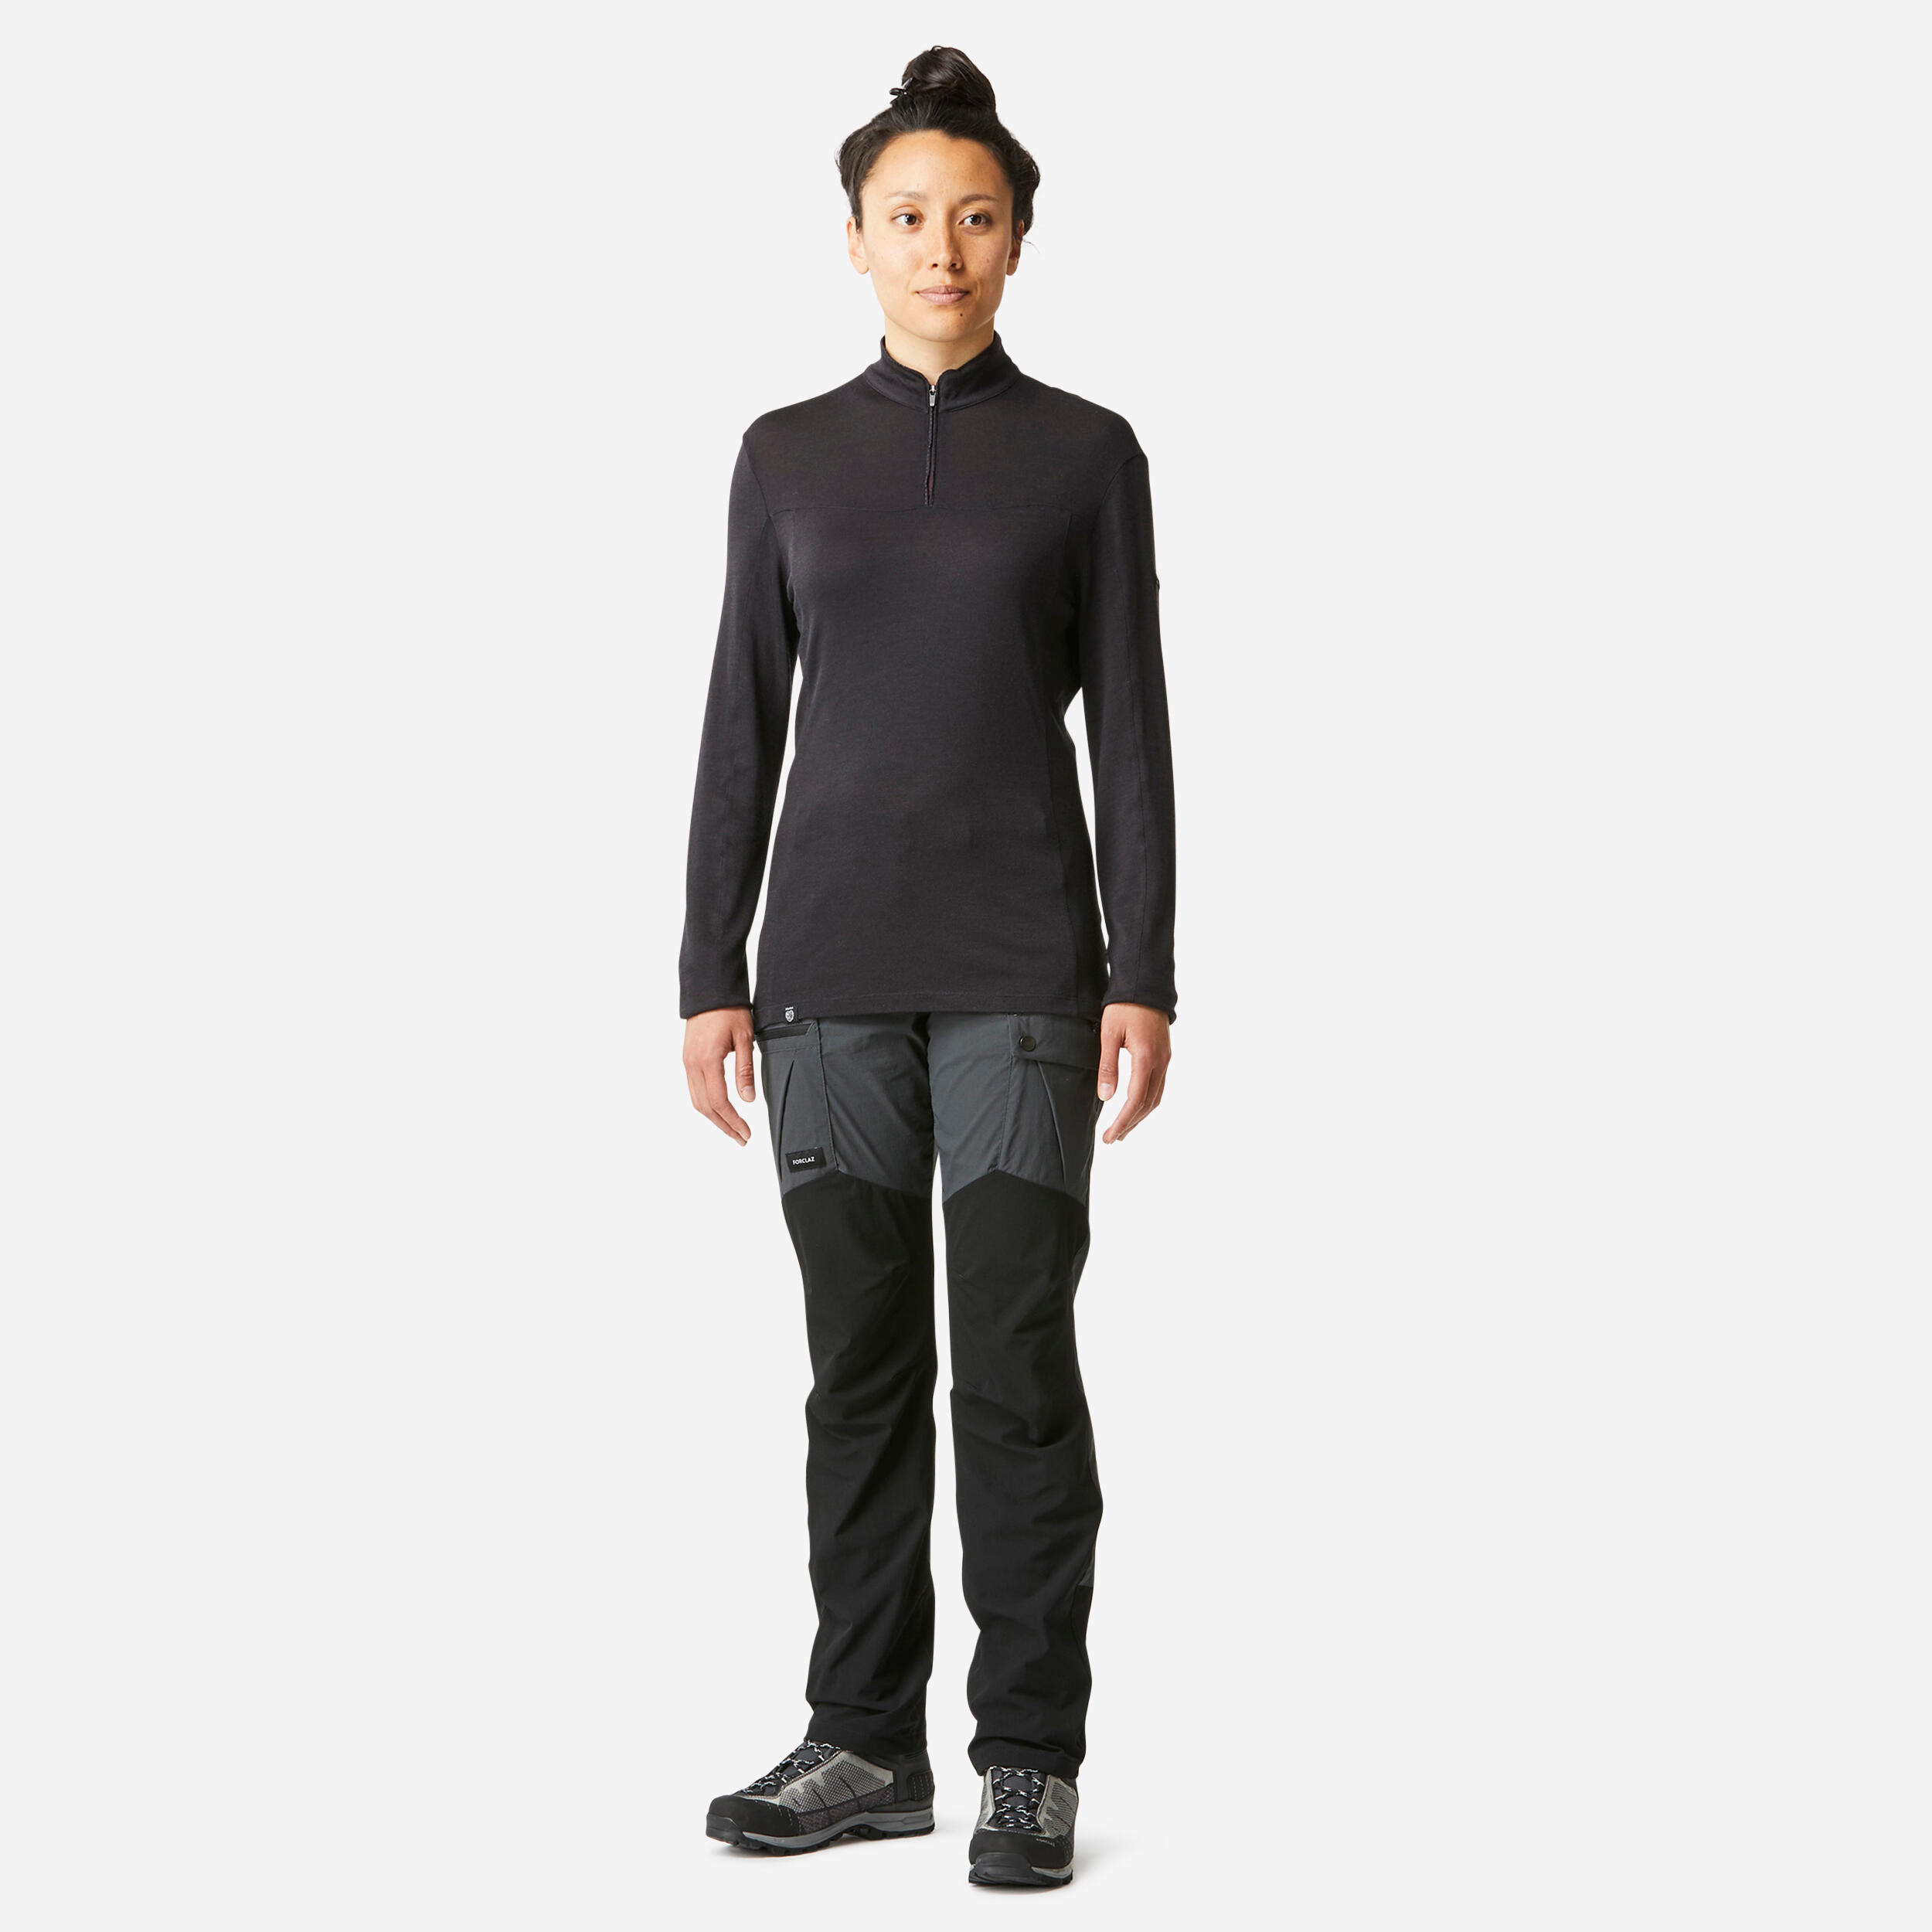 FORCLAZ Women’s Long-sleeved Merino Zipped Neck T-shirt - MT500